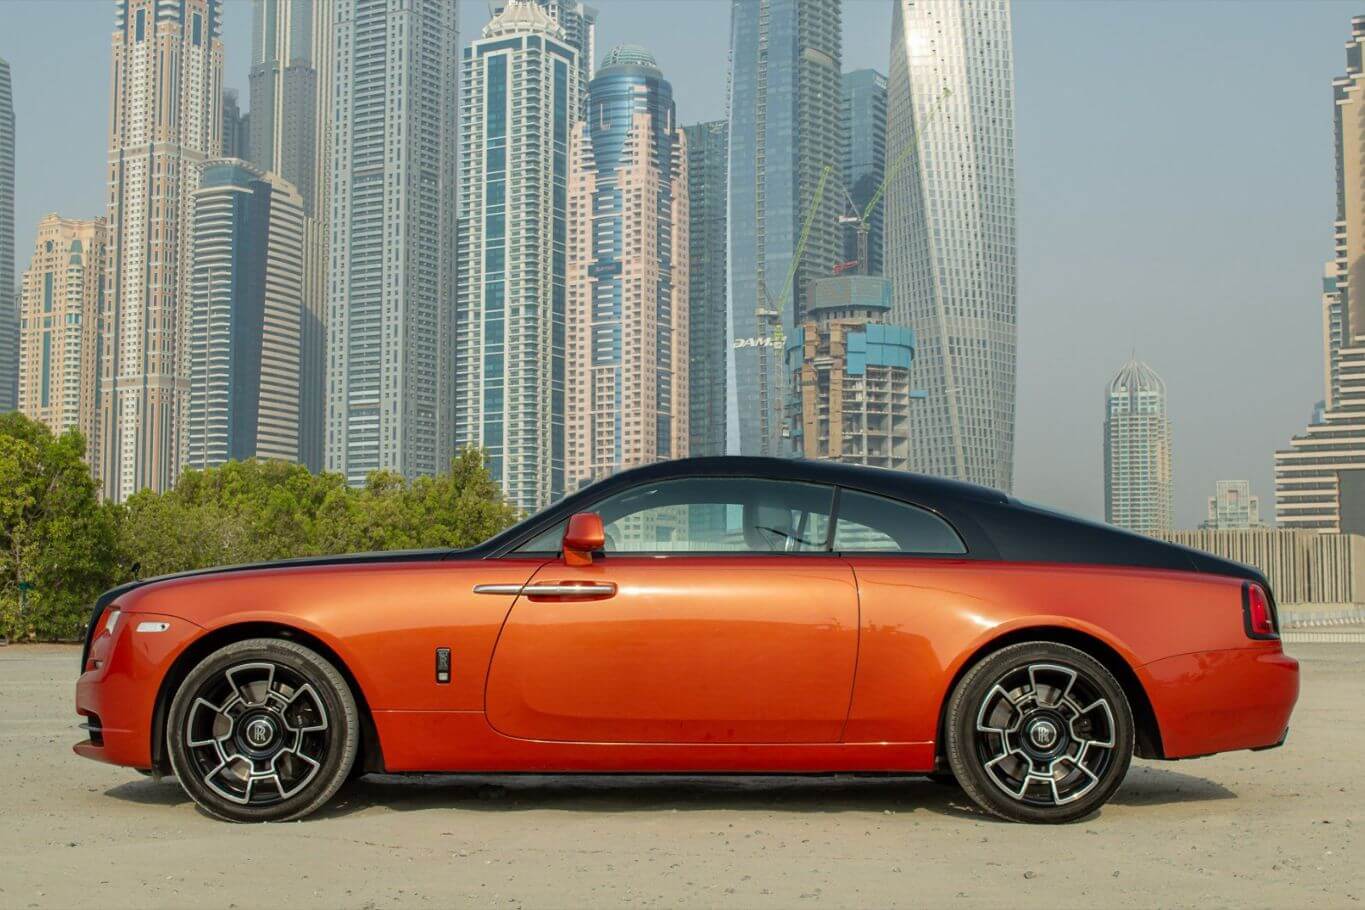 Rolls Royce Wraith Orange